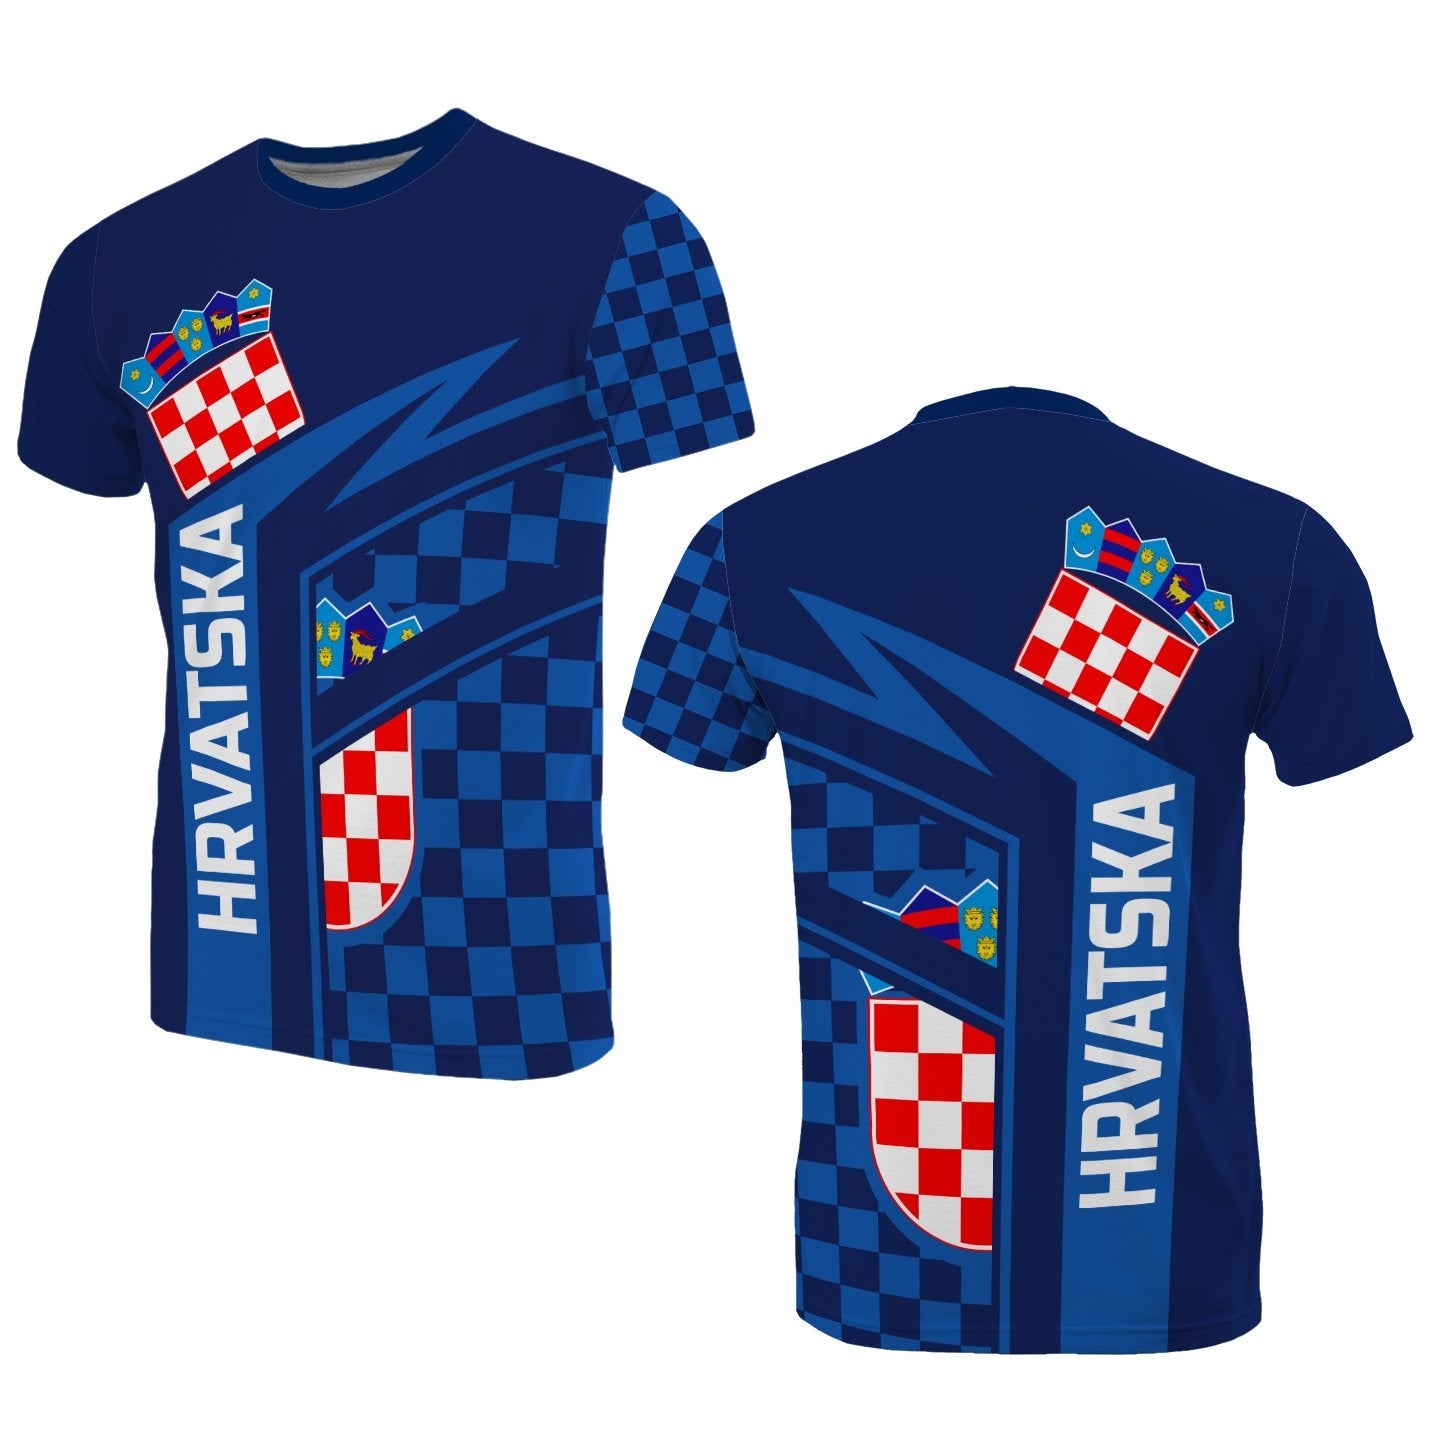 croatia-hrvatska-air-t-shirts-for-men-and-women-blue